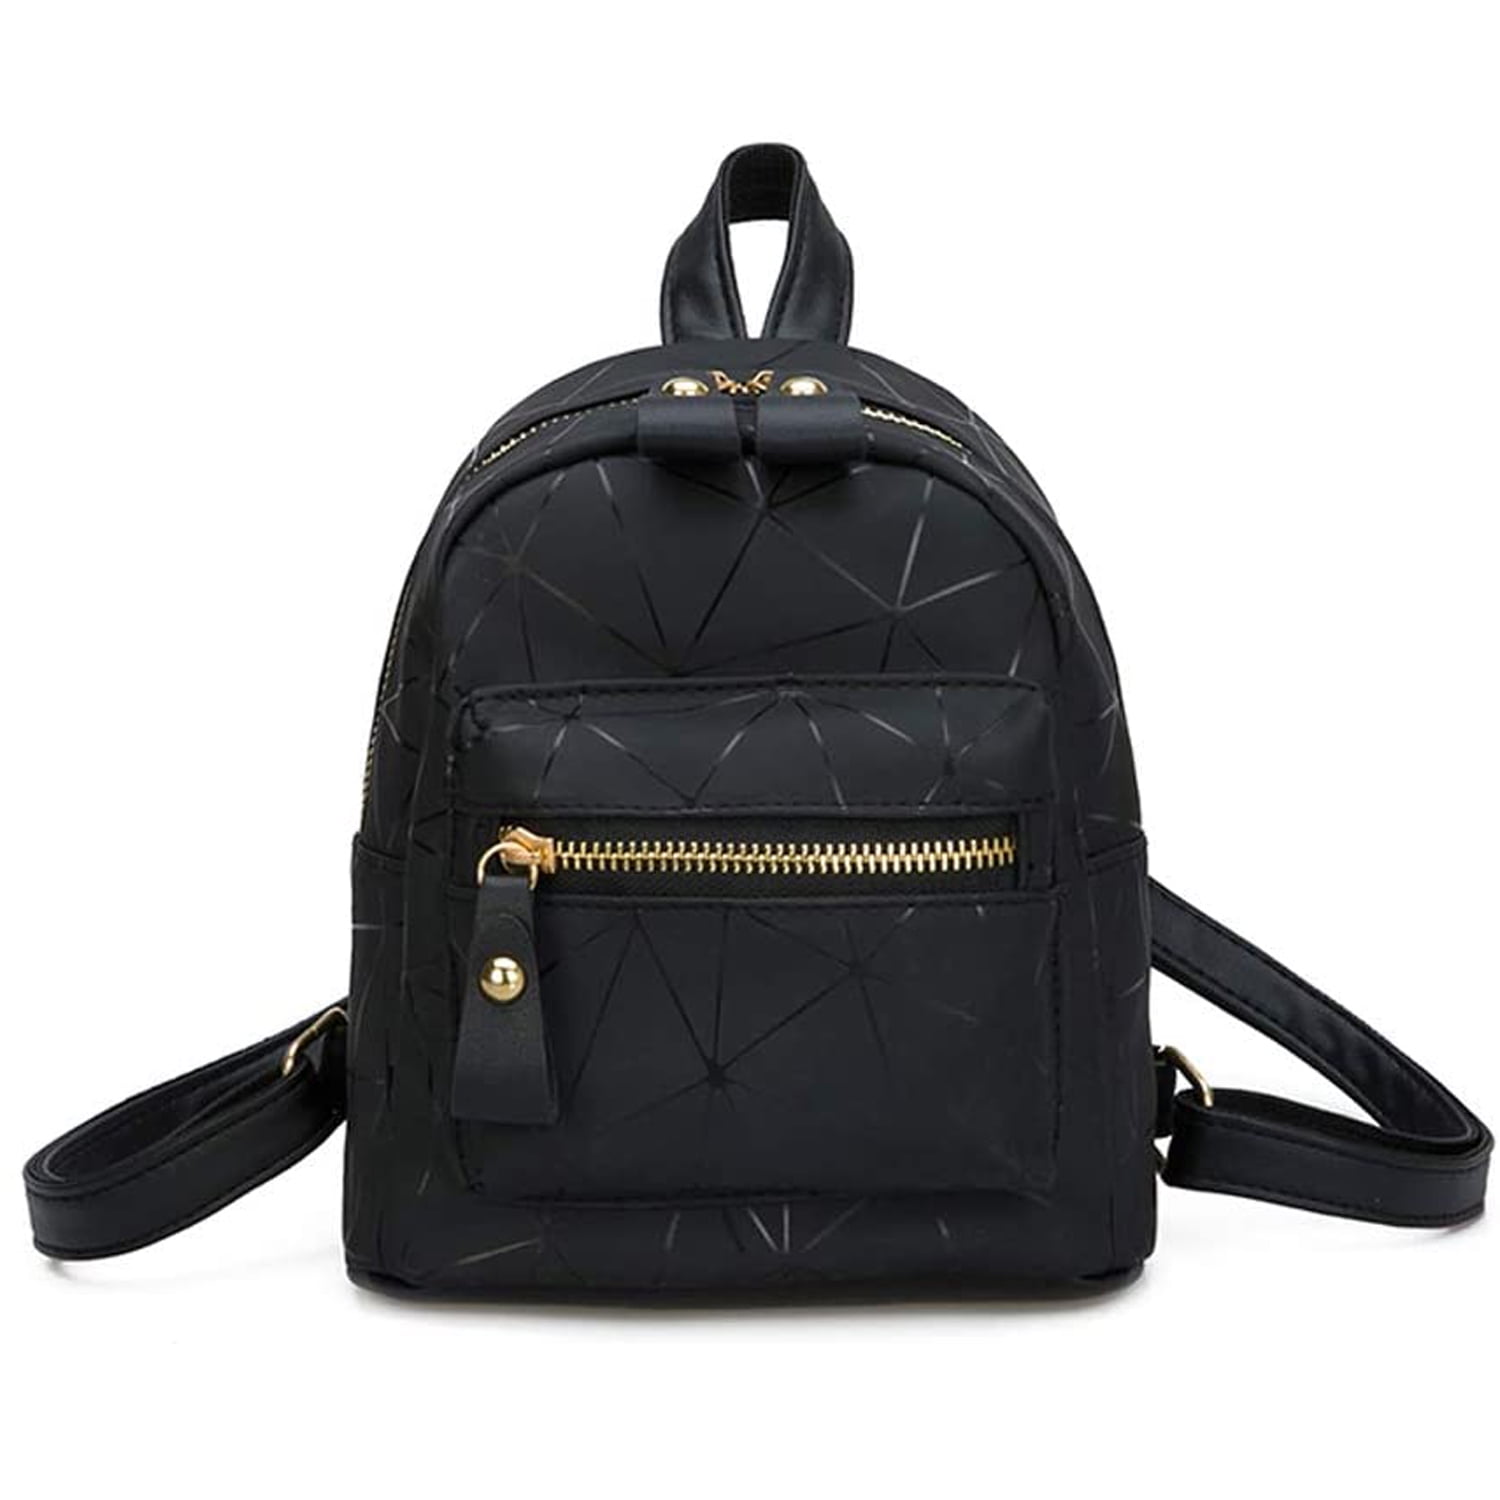 Cheap Women Backpack Geometric Shoulder Bag Student's School Bag